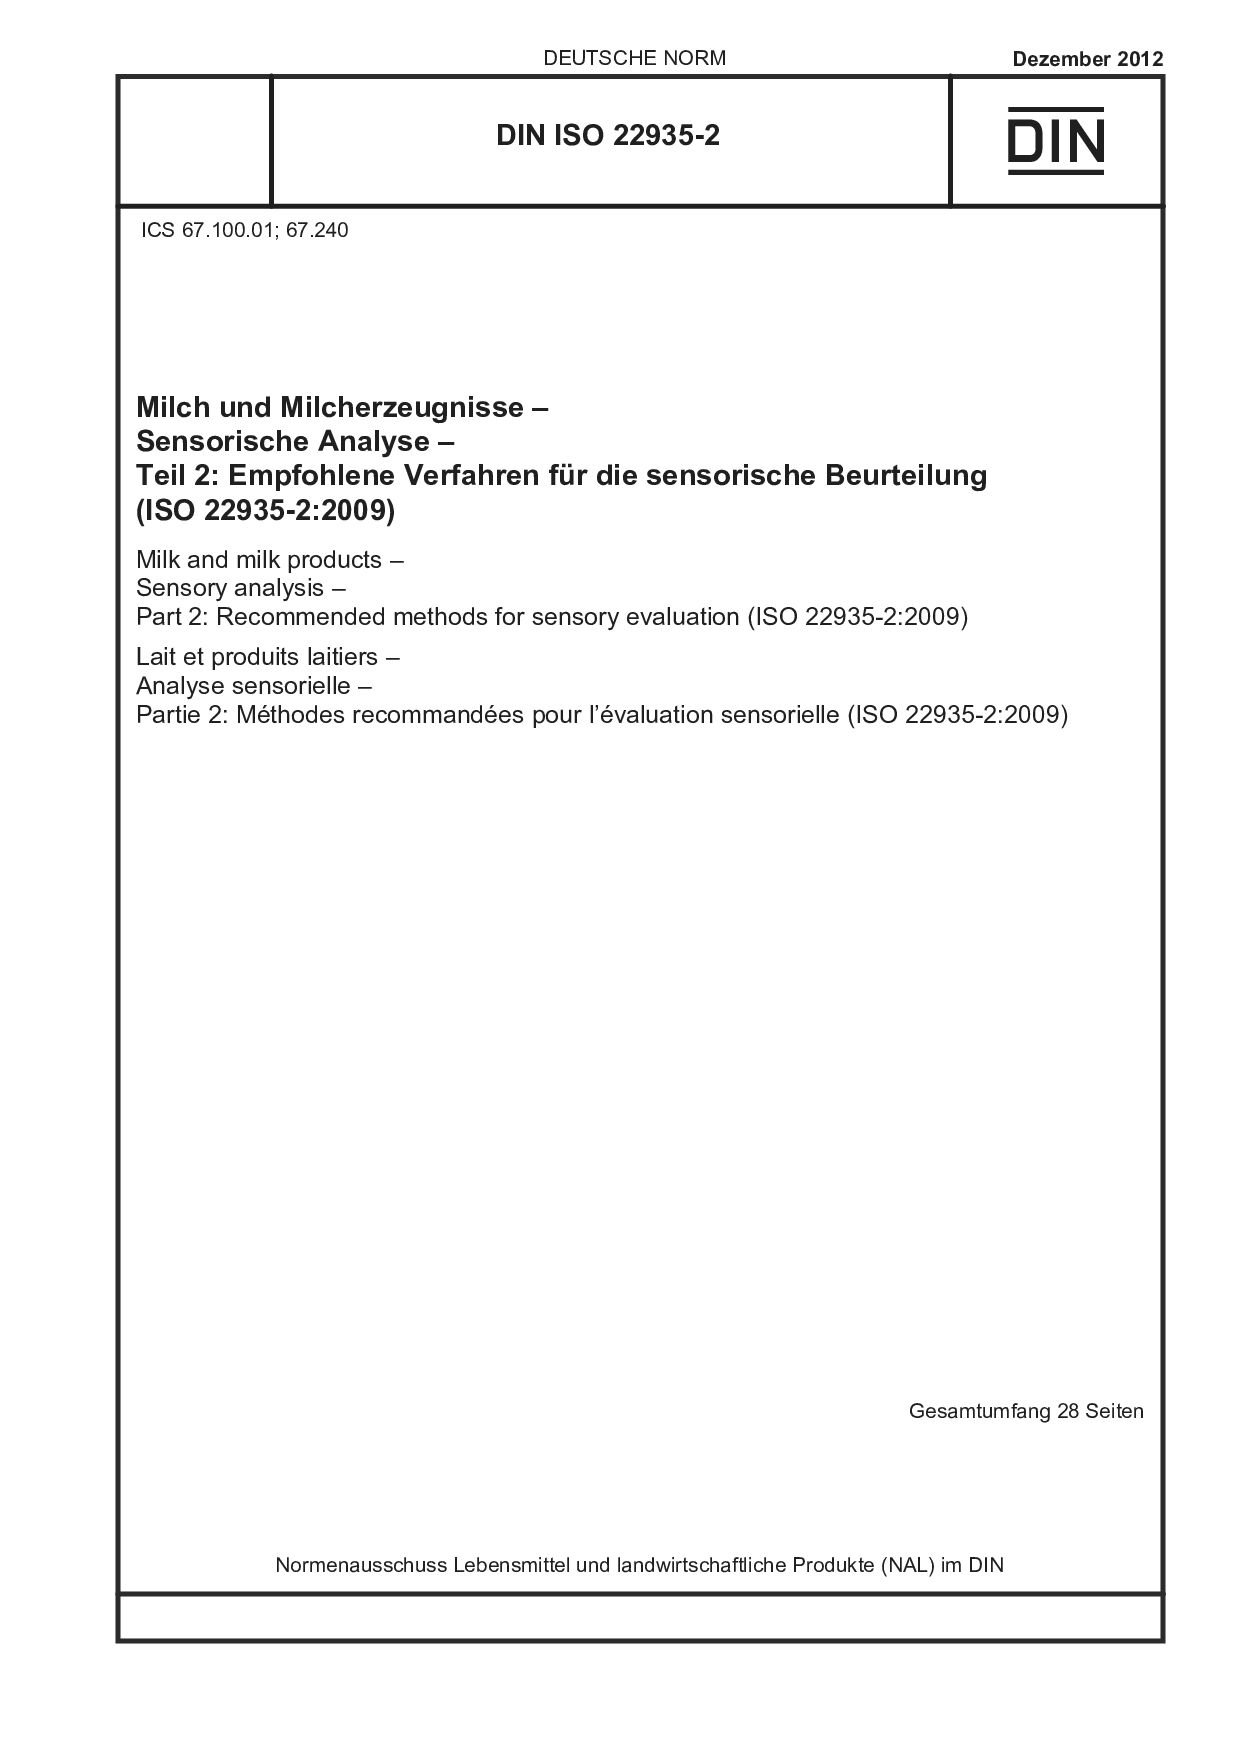 DIN ISO 22935-2:2012